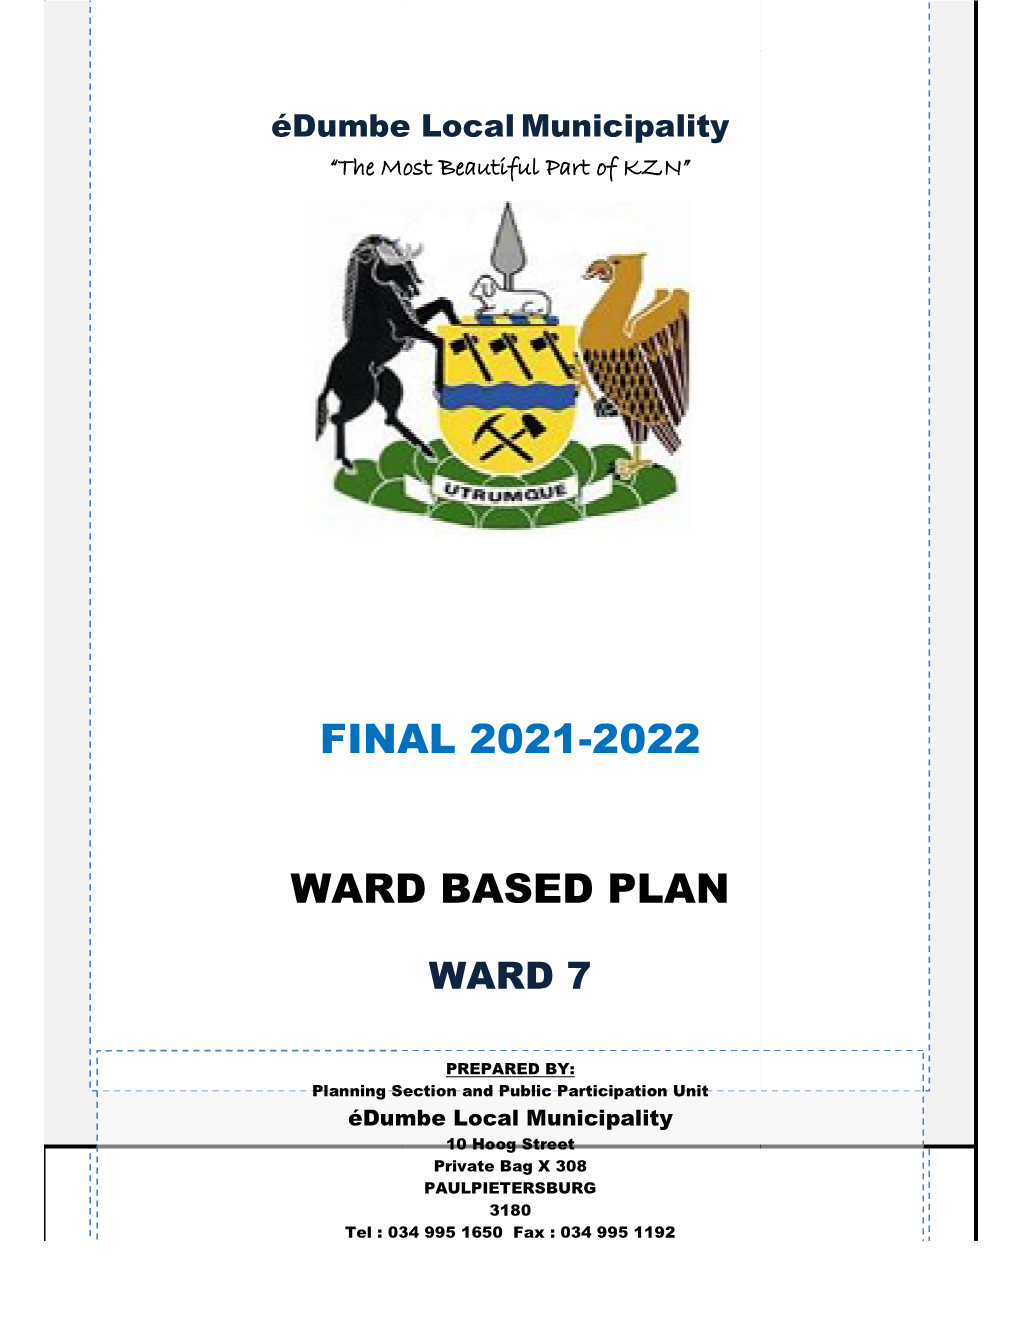 Ward Based P Final 202 Ward Based Plan Final 2021-2022